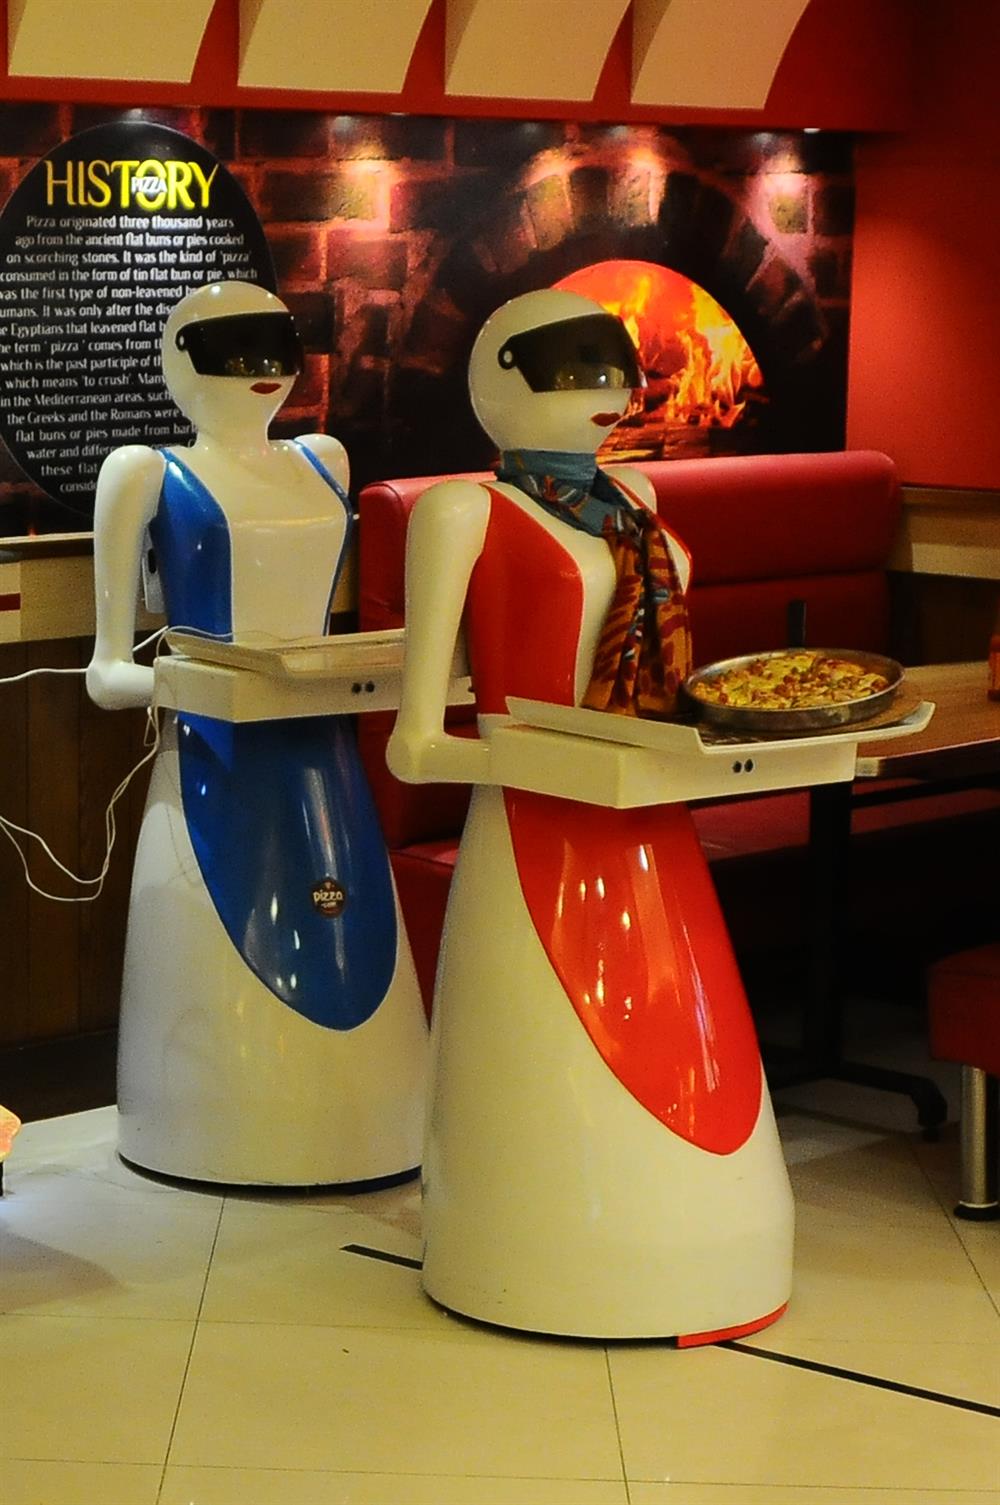 Robot waitress serves customers at Multan pizzeria